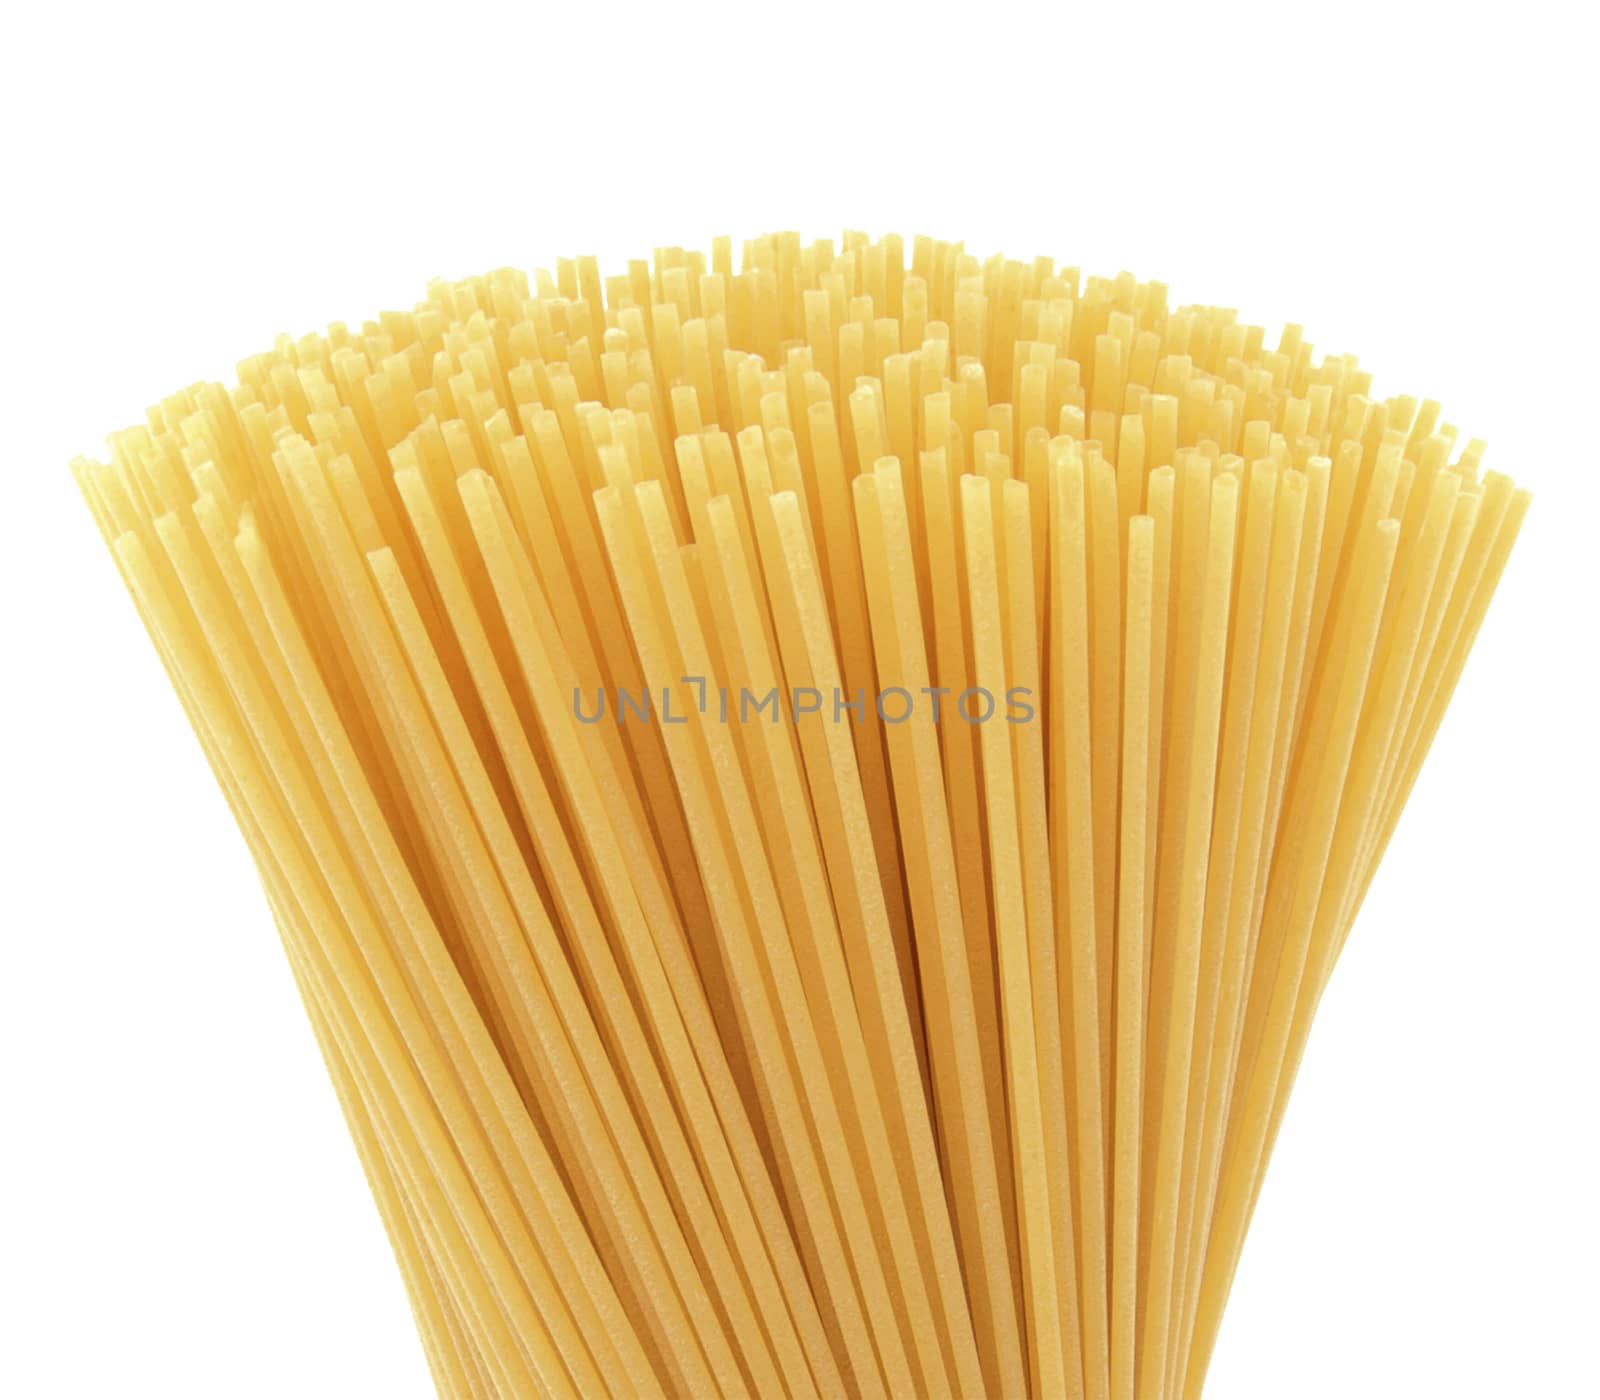 Uncooked pasta spaghetti macaroni isolated on white background by ozaiachin